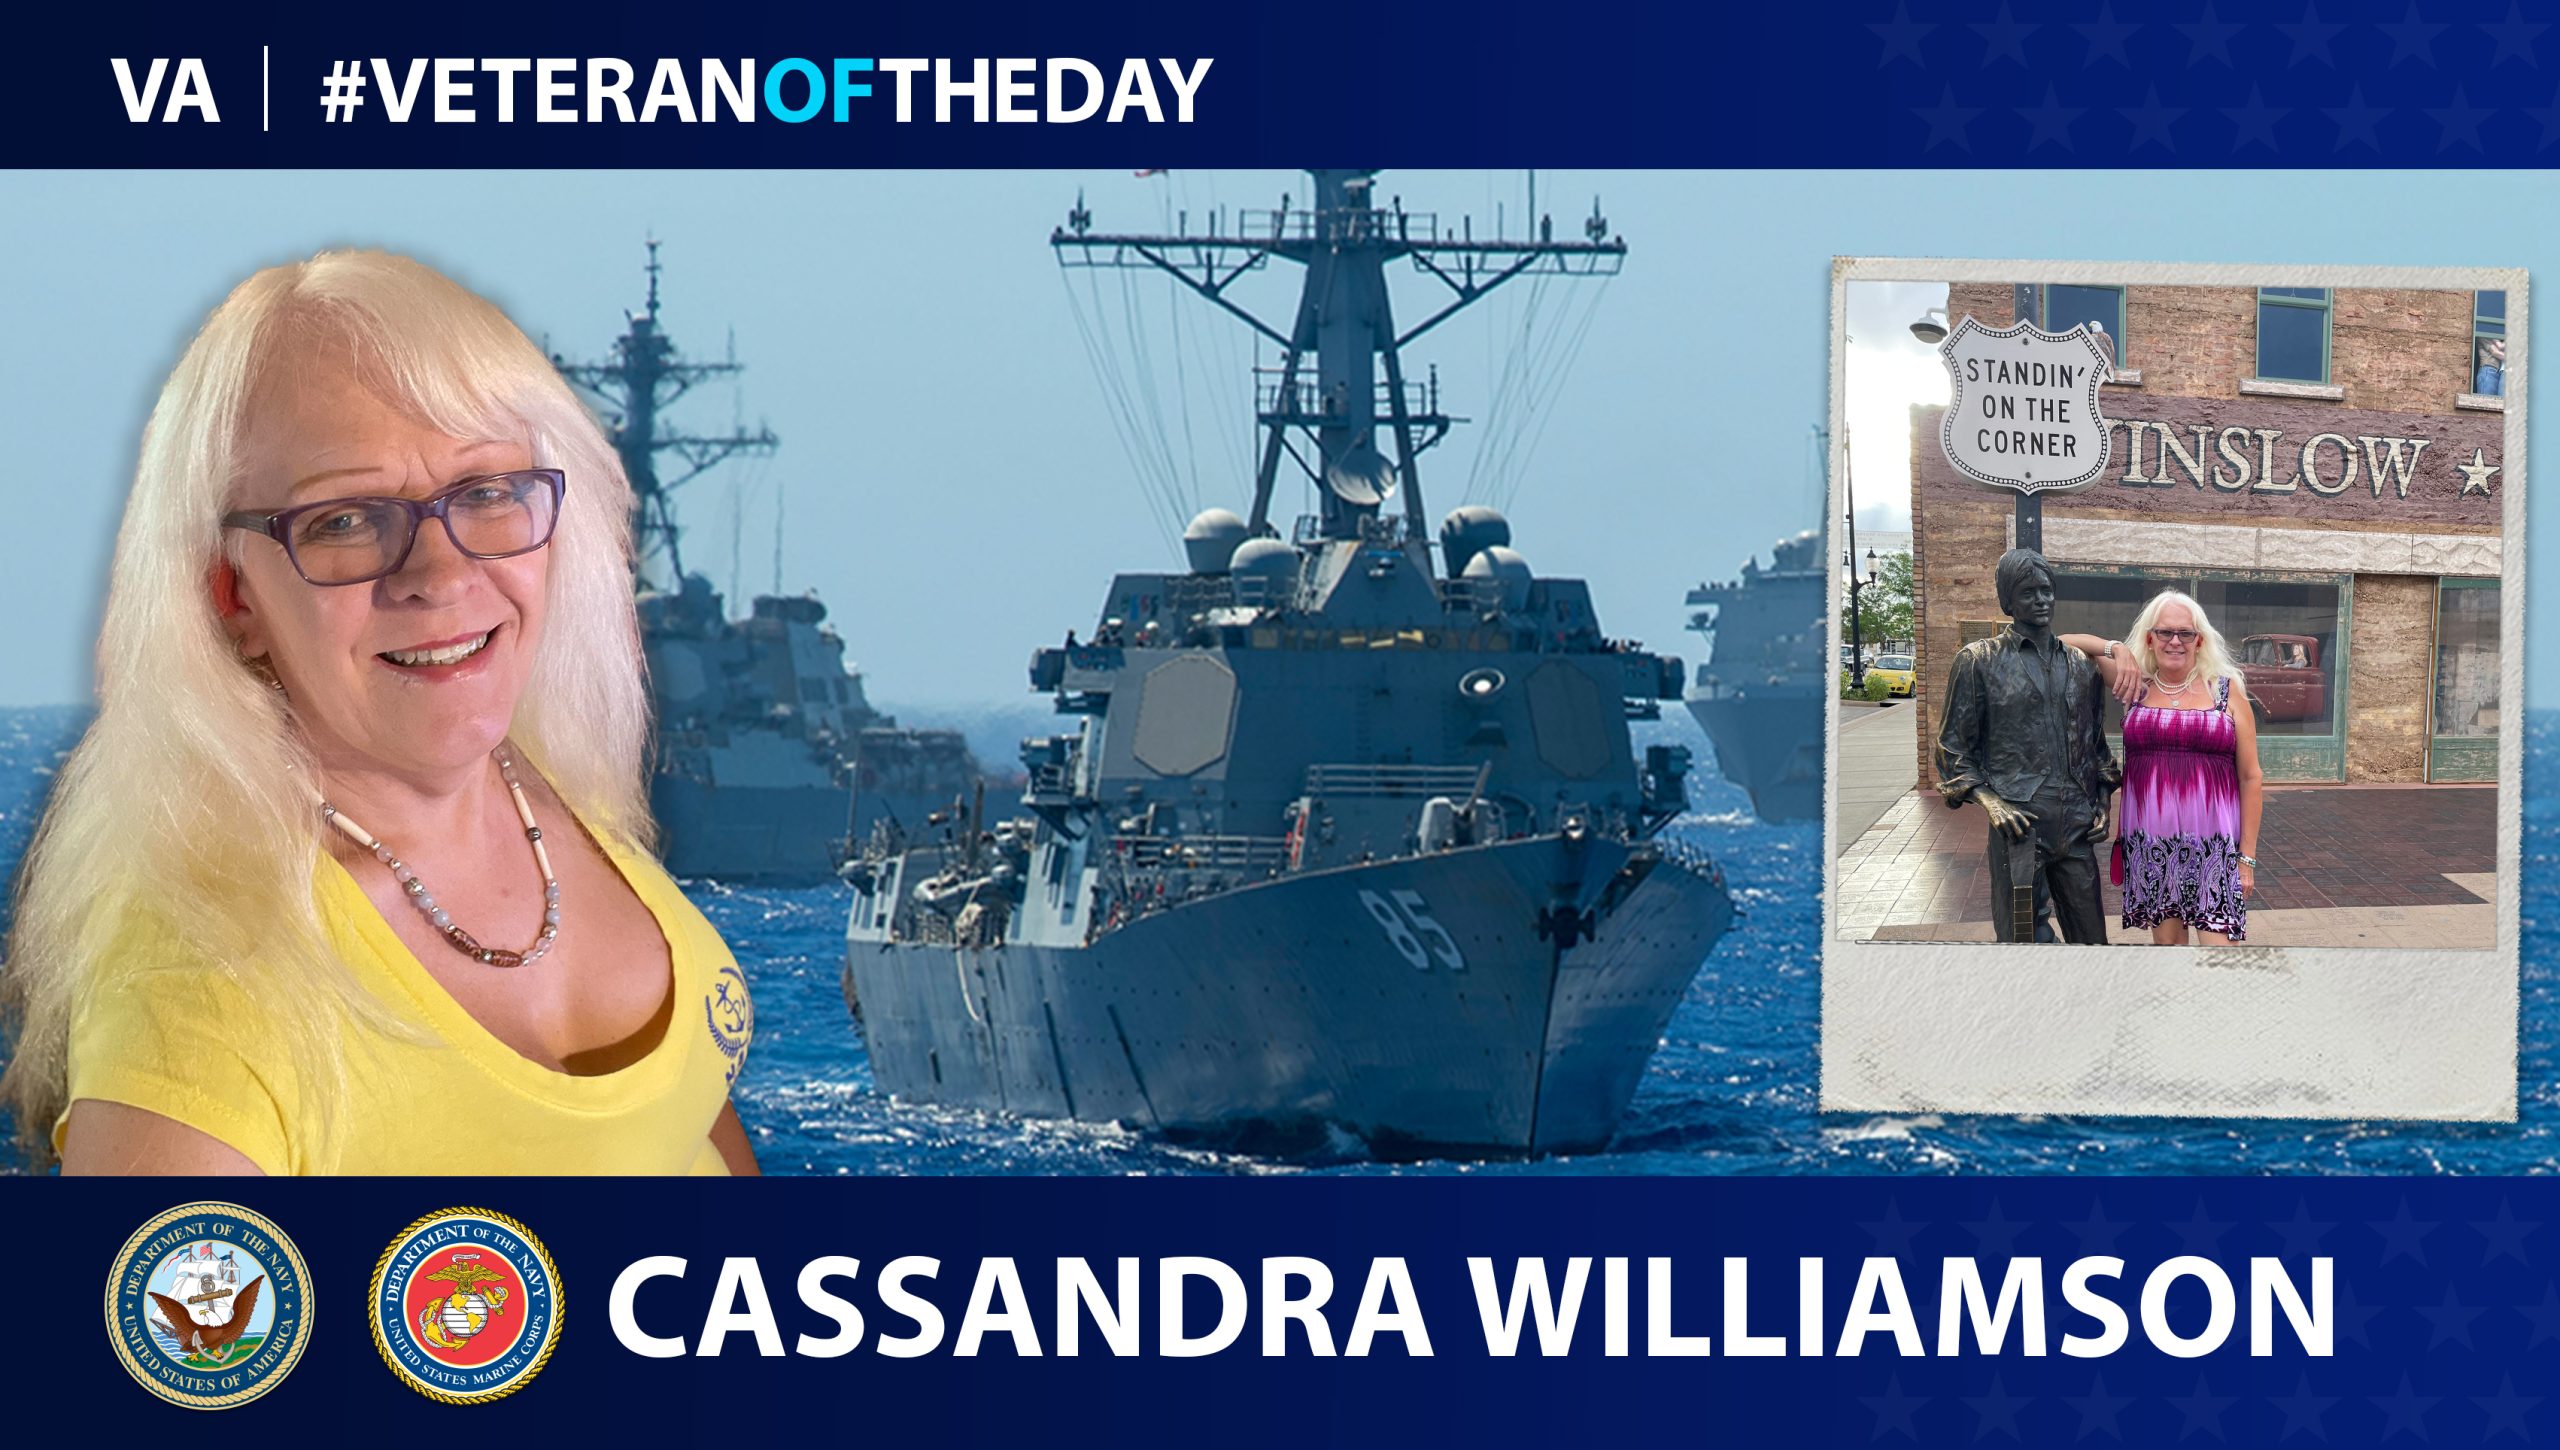 Navy and Marine Corps Veteran Cassandra Williamson is today’s Veteran of the Day.